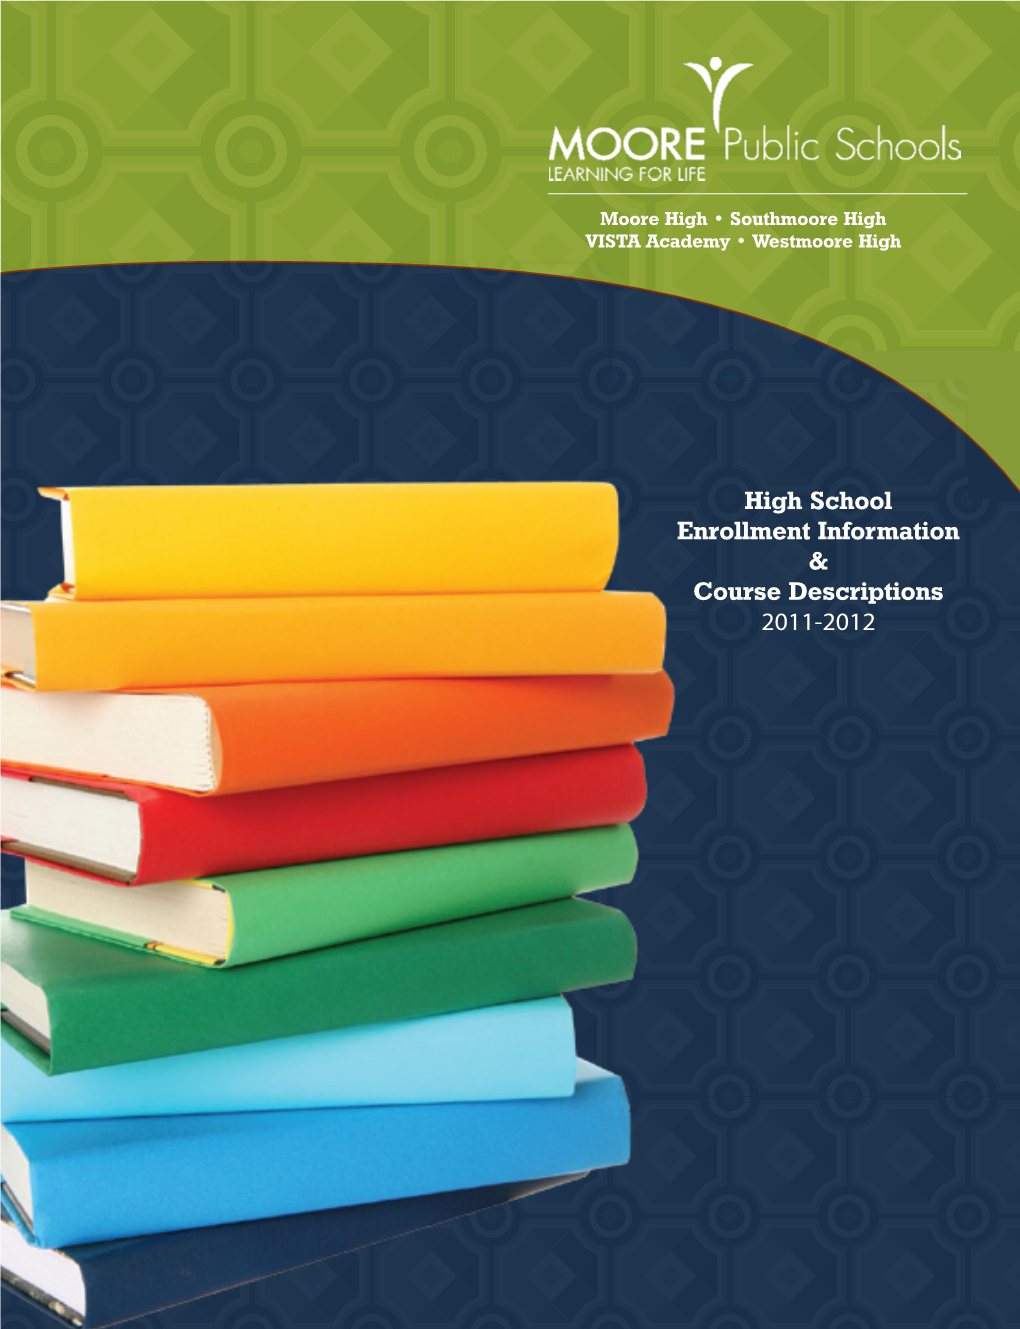 High School Enrollment Information & Course Descriptions 2011-2012